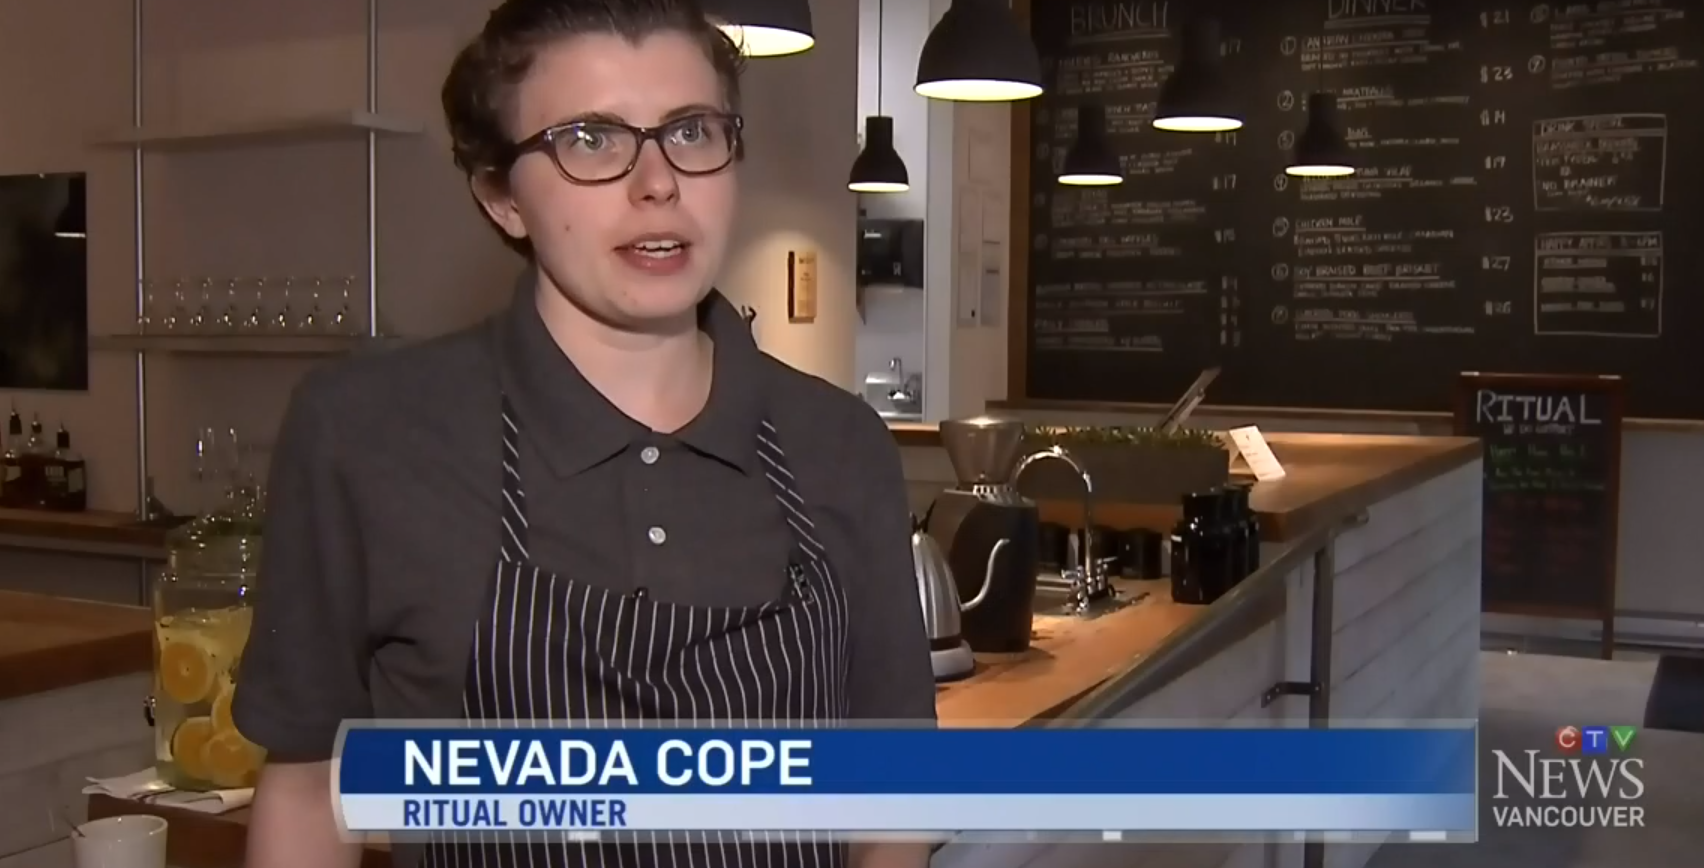 Ritual Owner Nevada Cope via CTV News